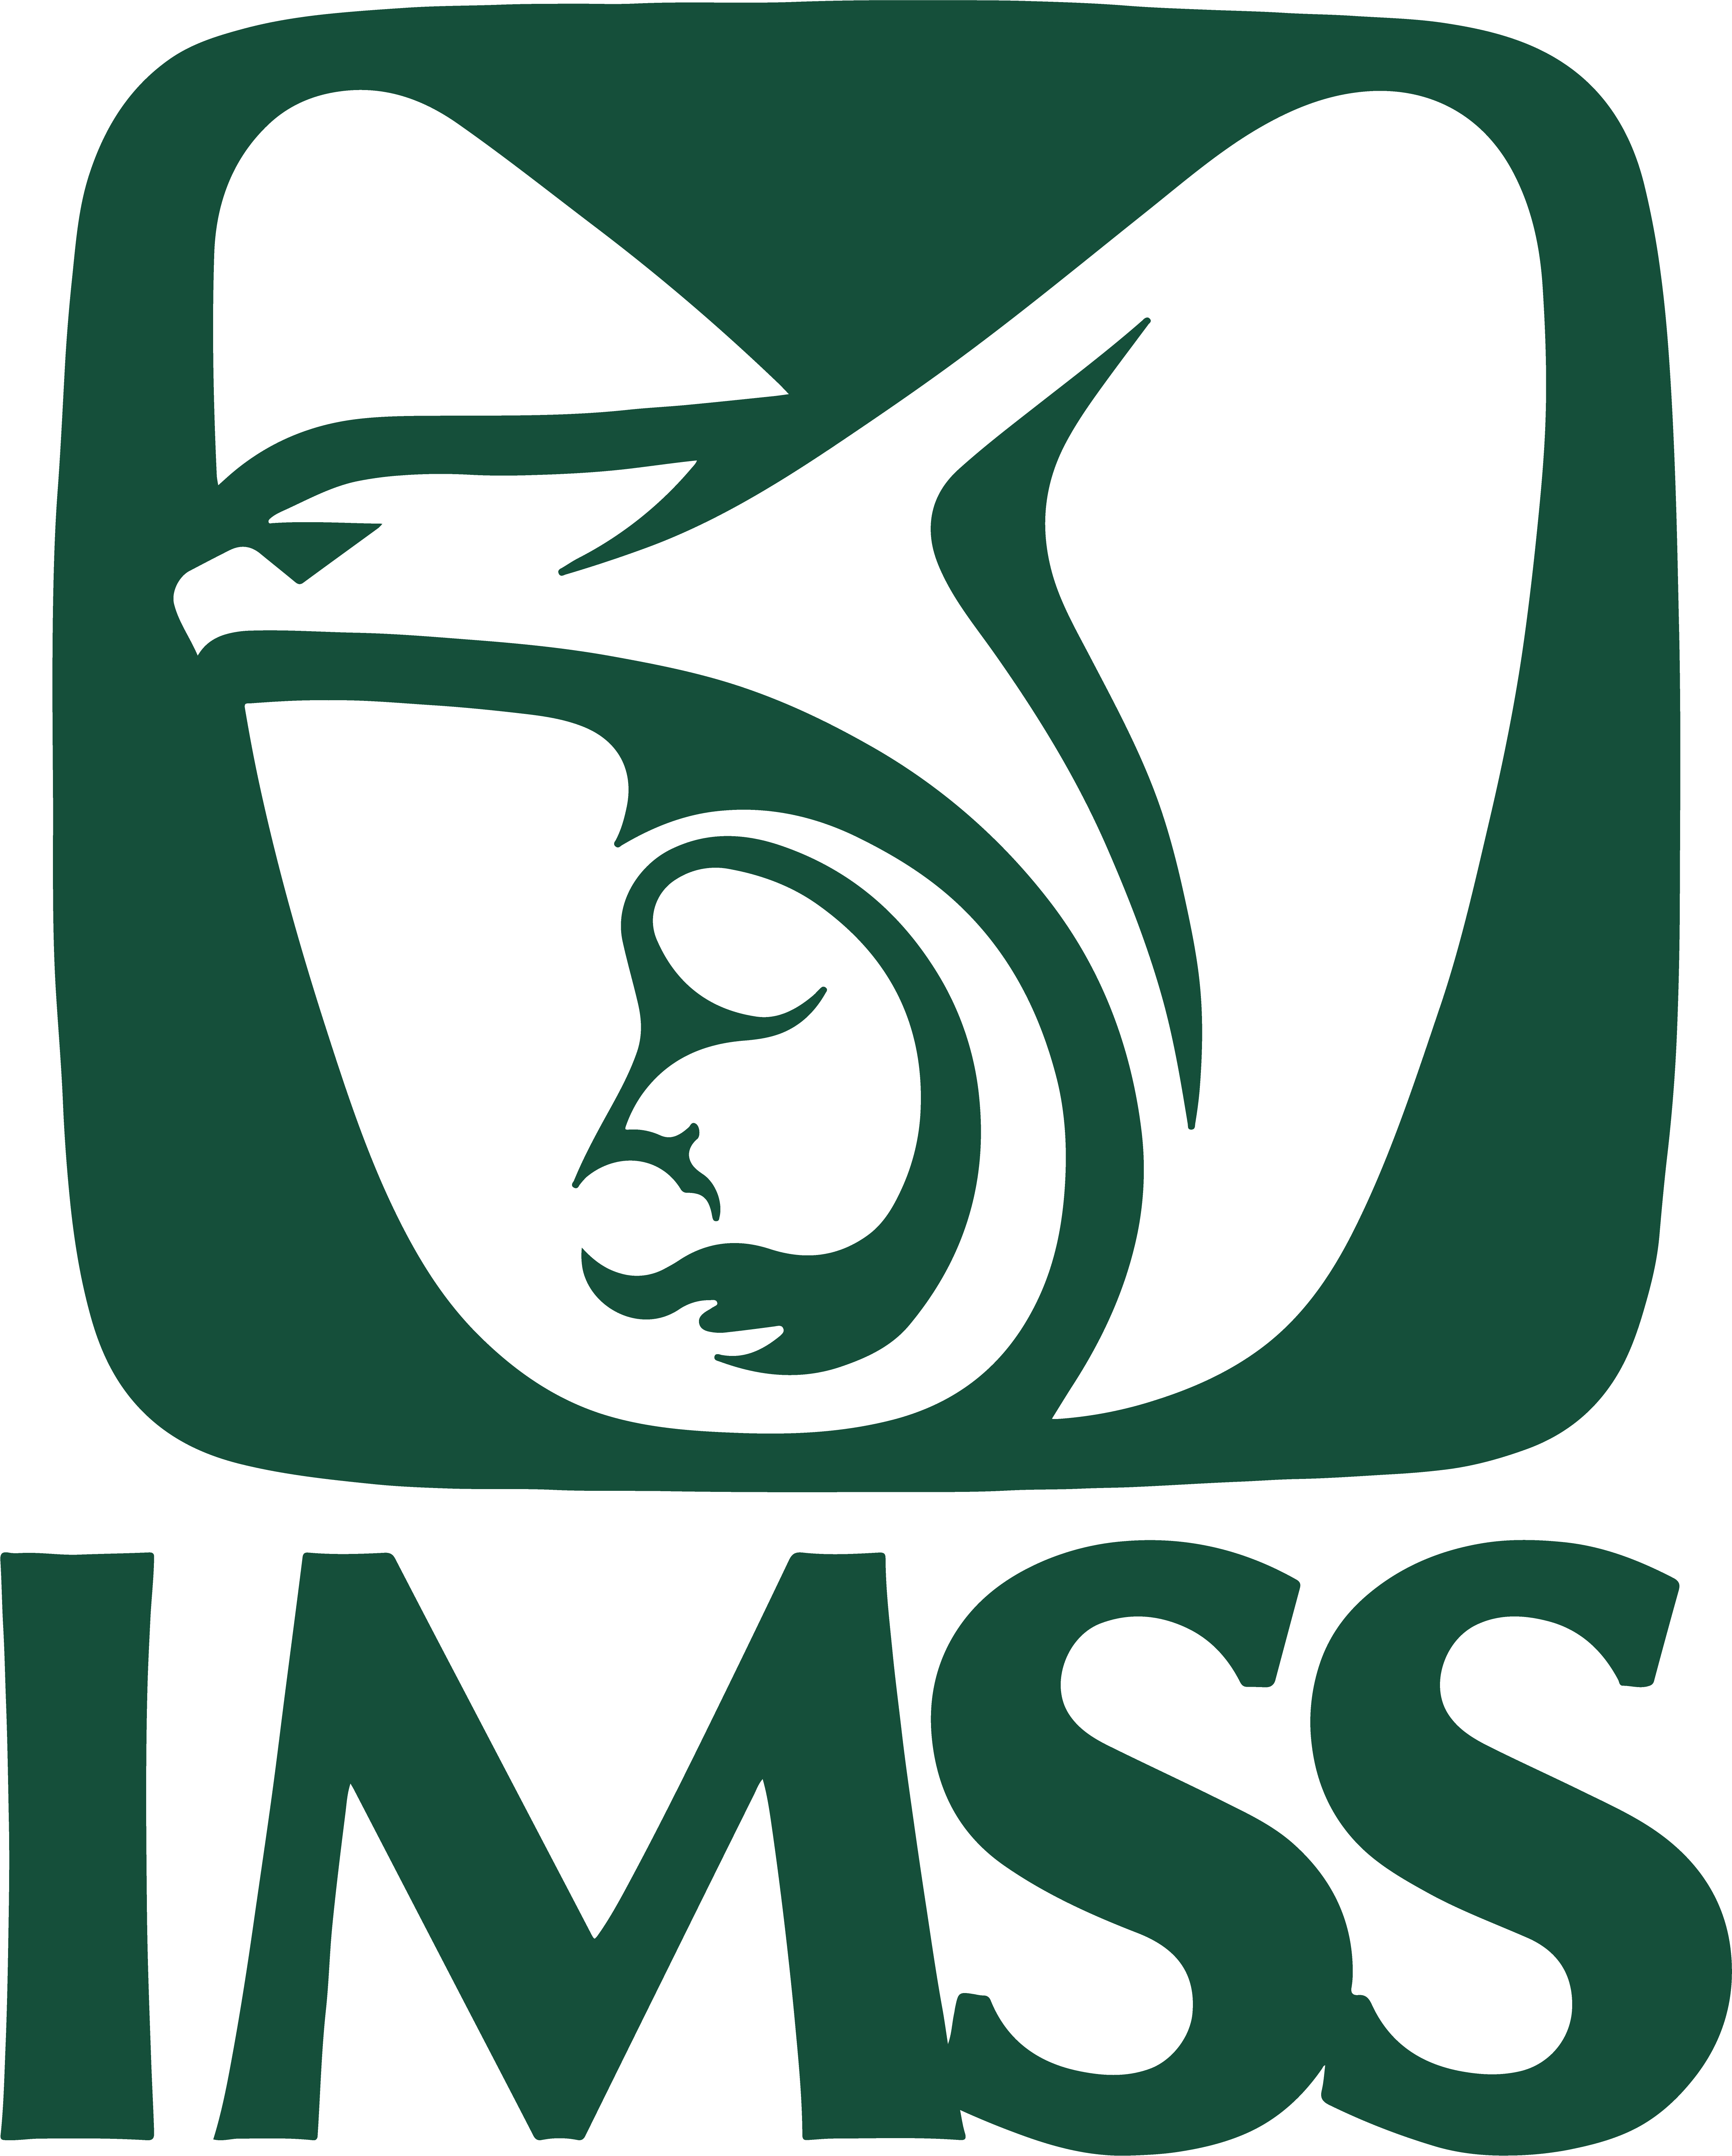 Logo IMSS Verde CLiente ORS